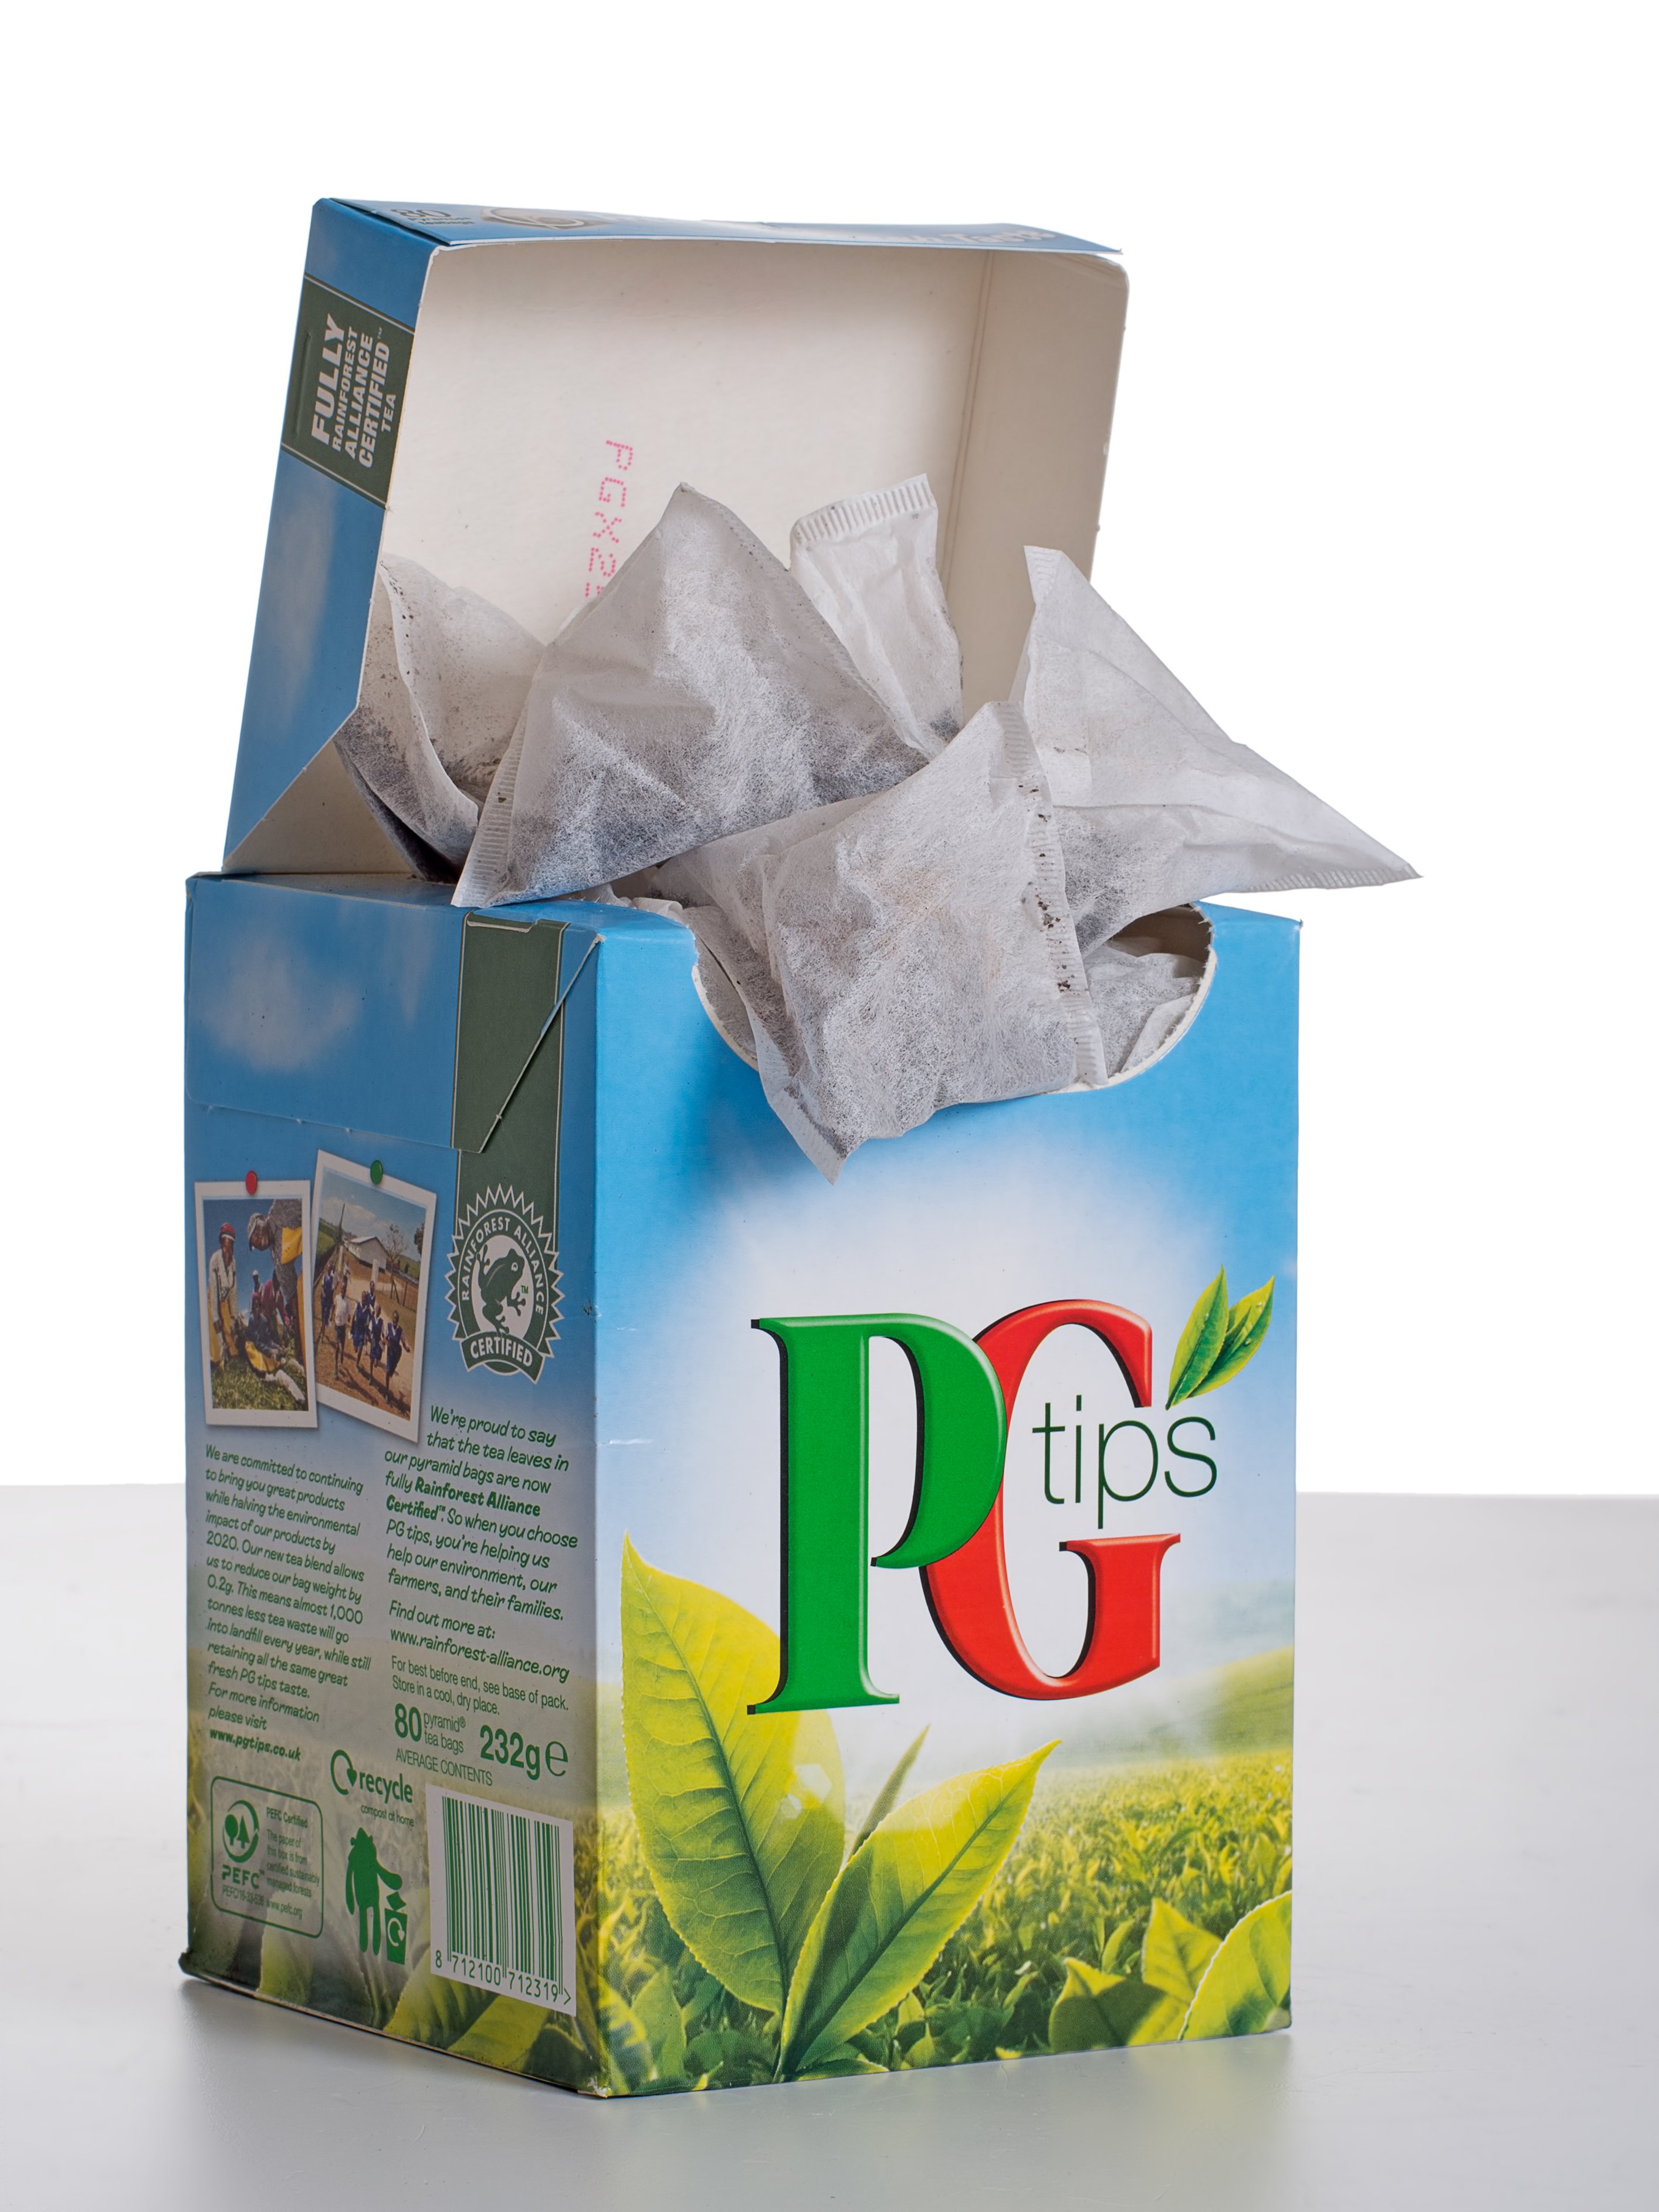 A box of PG Tips Tea | Photo; Shutterstock